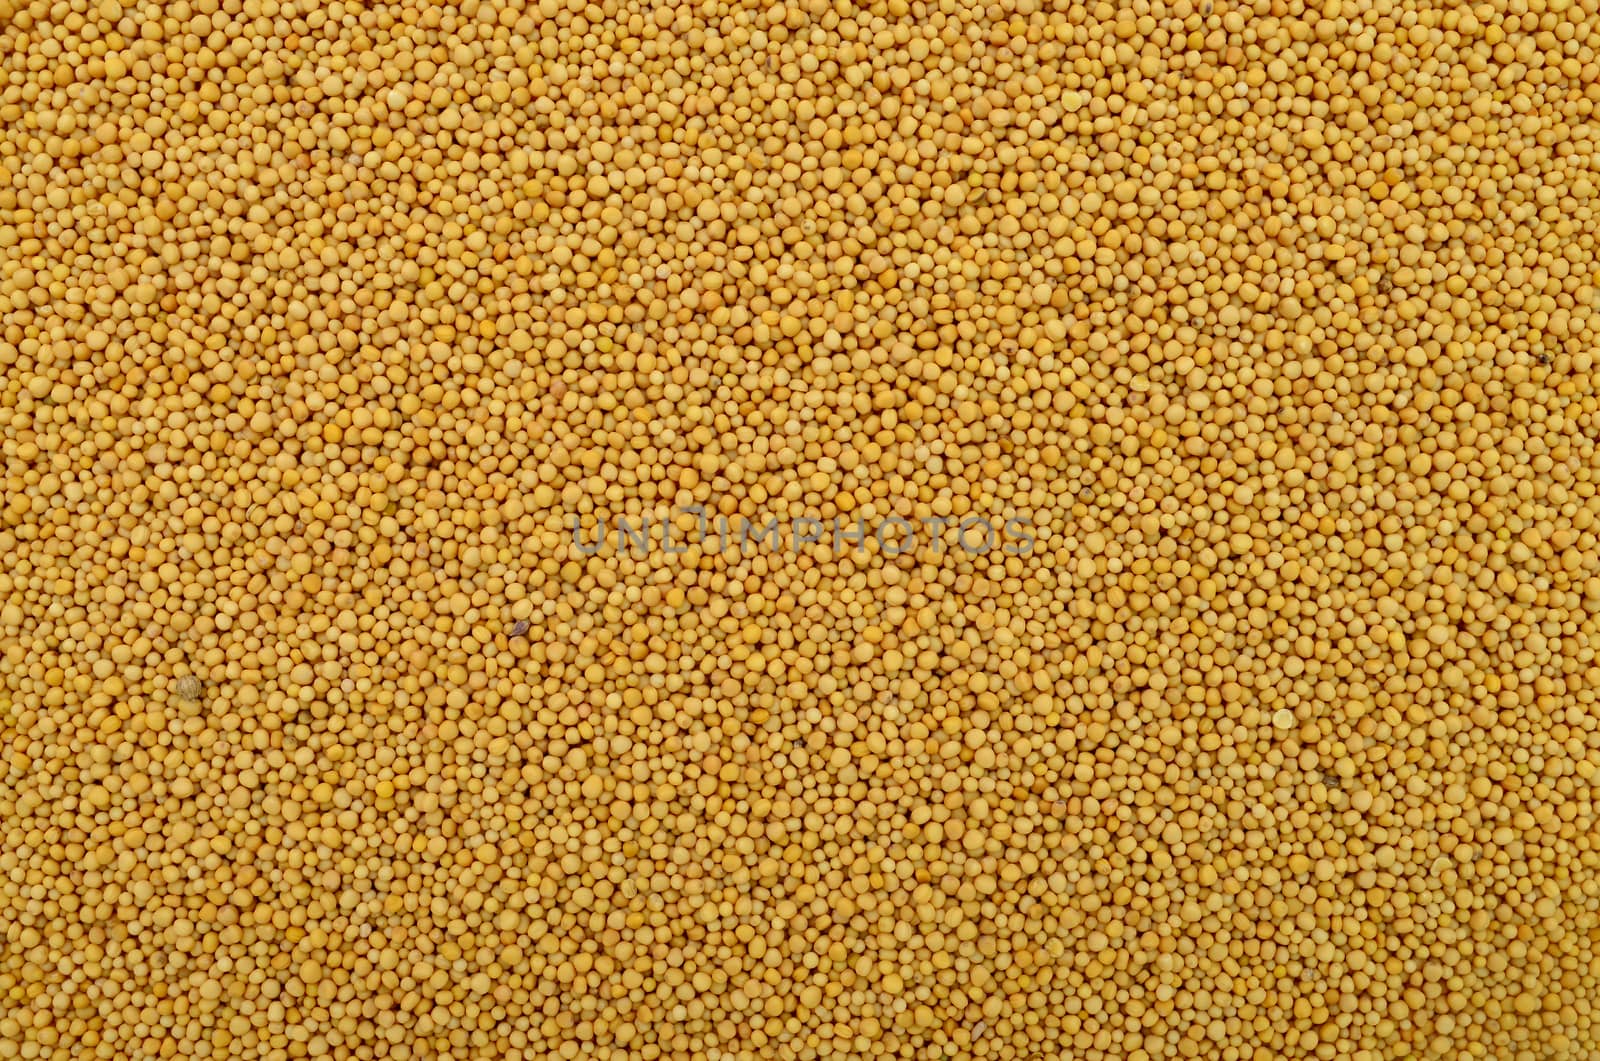 yellow mustard seeds texture food ingredient background